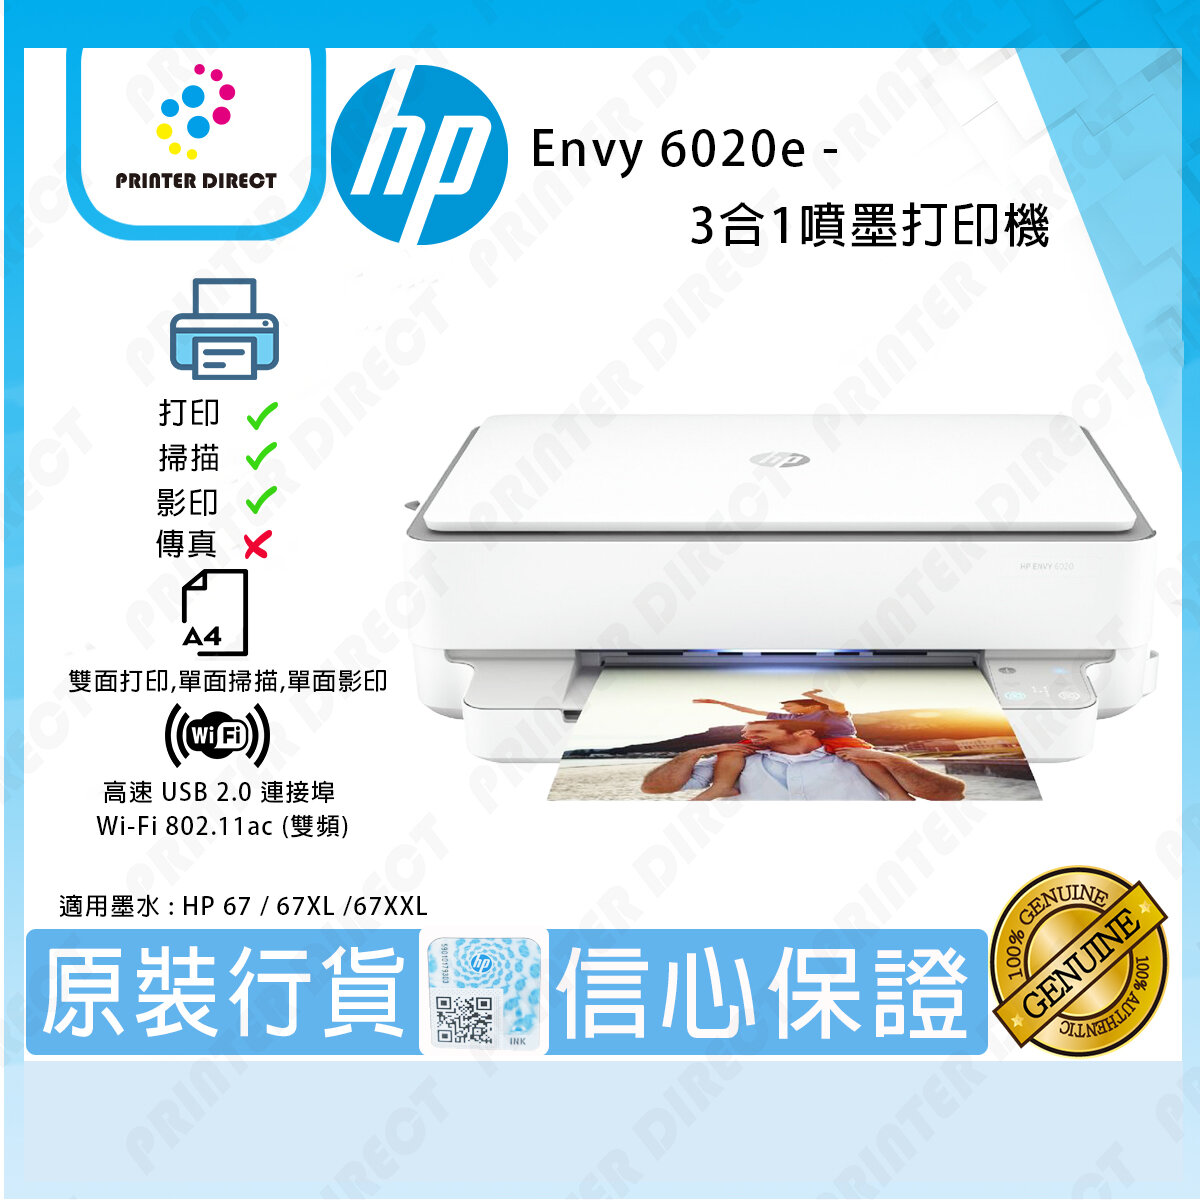 HP - Envy 6020e 噴墨3合1(雙面打印,單面掃描,單面影印) #223N6A #6020e #67